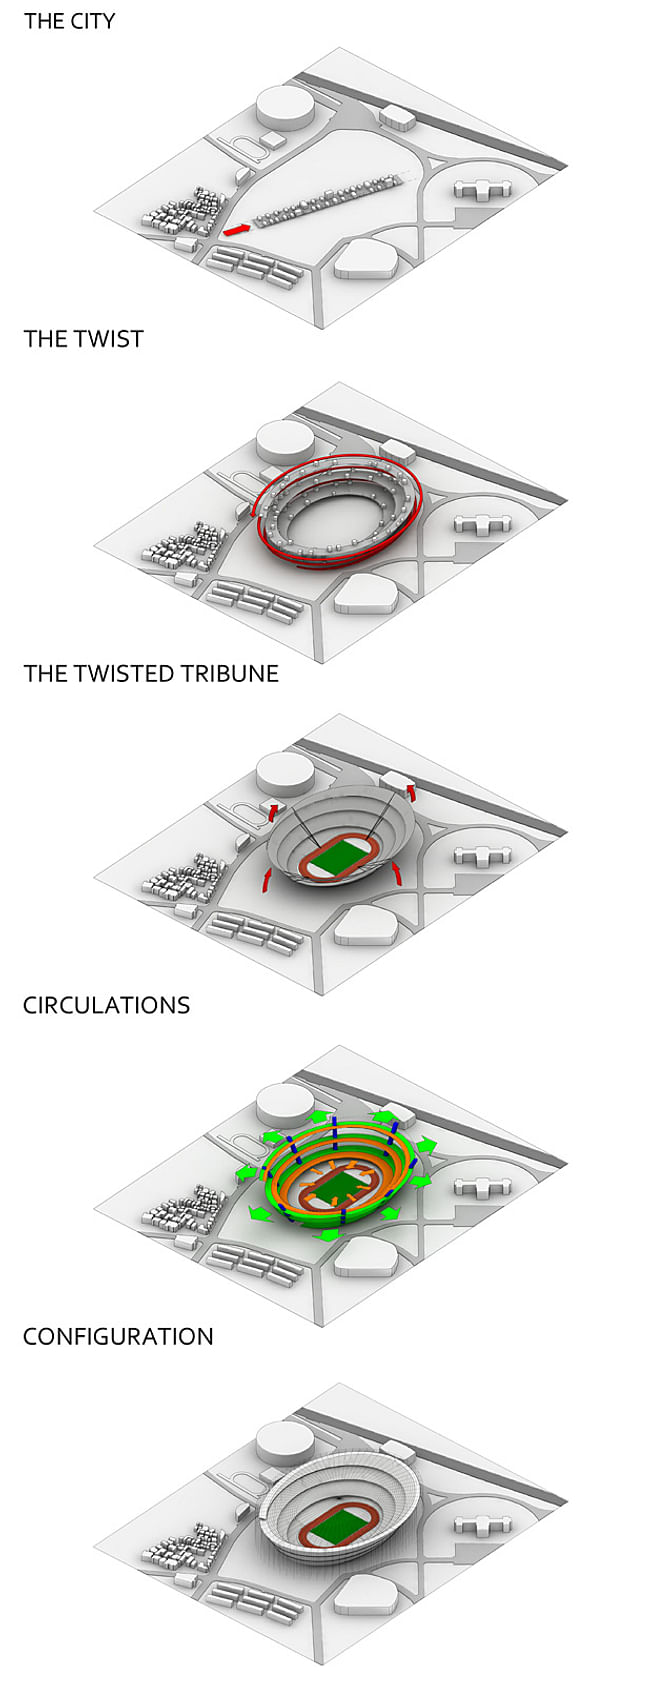 Diagrams (Image: MenoMenoPiu Architects & FHF Architectes)